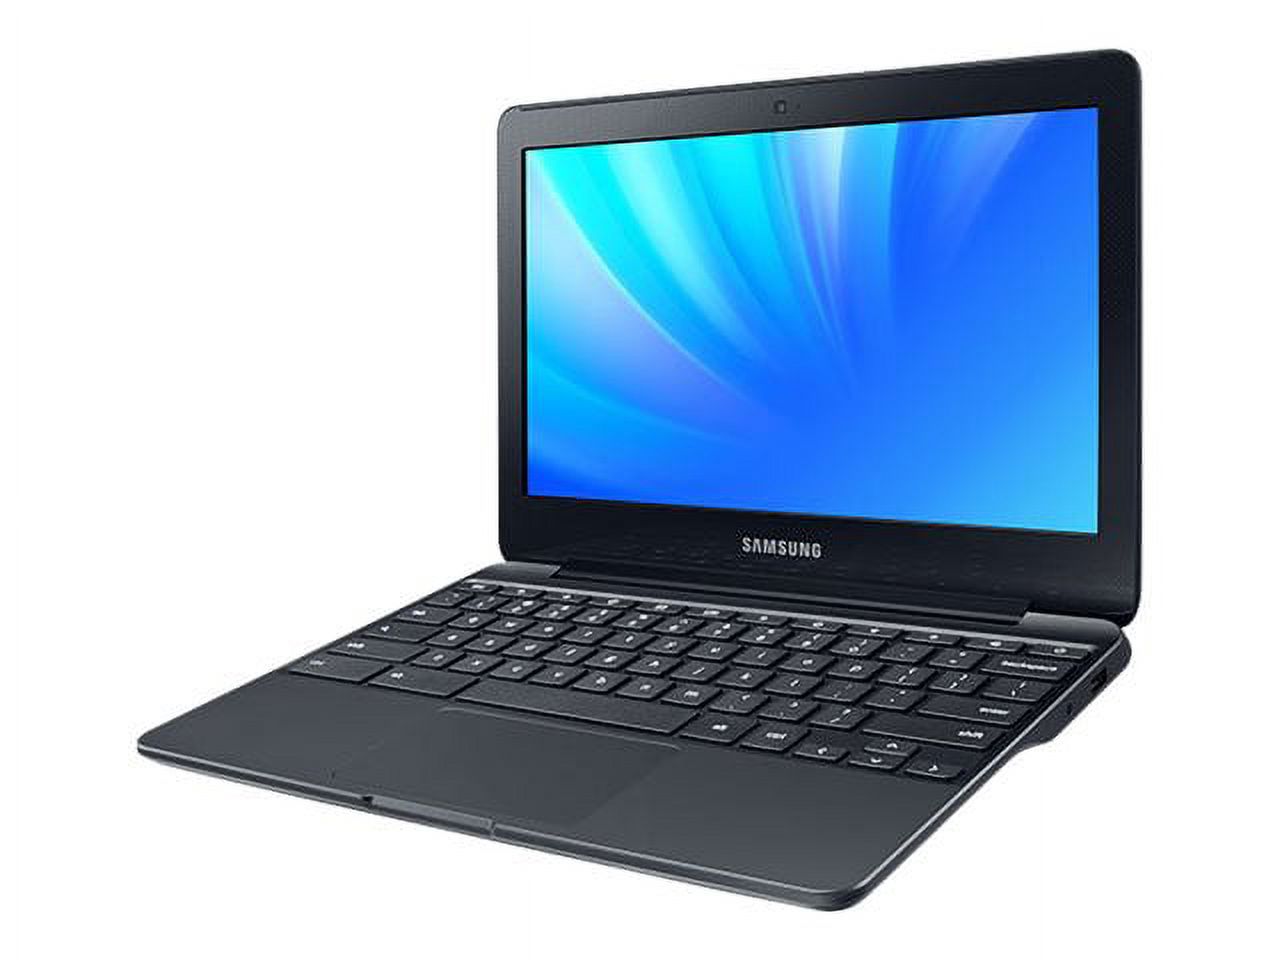 SAMSUNG 11.6" Chromebook 3, Intel Celeron N3060, 4GB RAM, 16GB eMMC, Metallic Black - XE500C13-K04US (Google Classroom Ready) - image 5 of 9